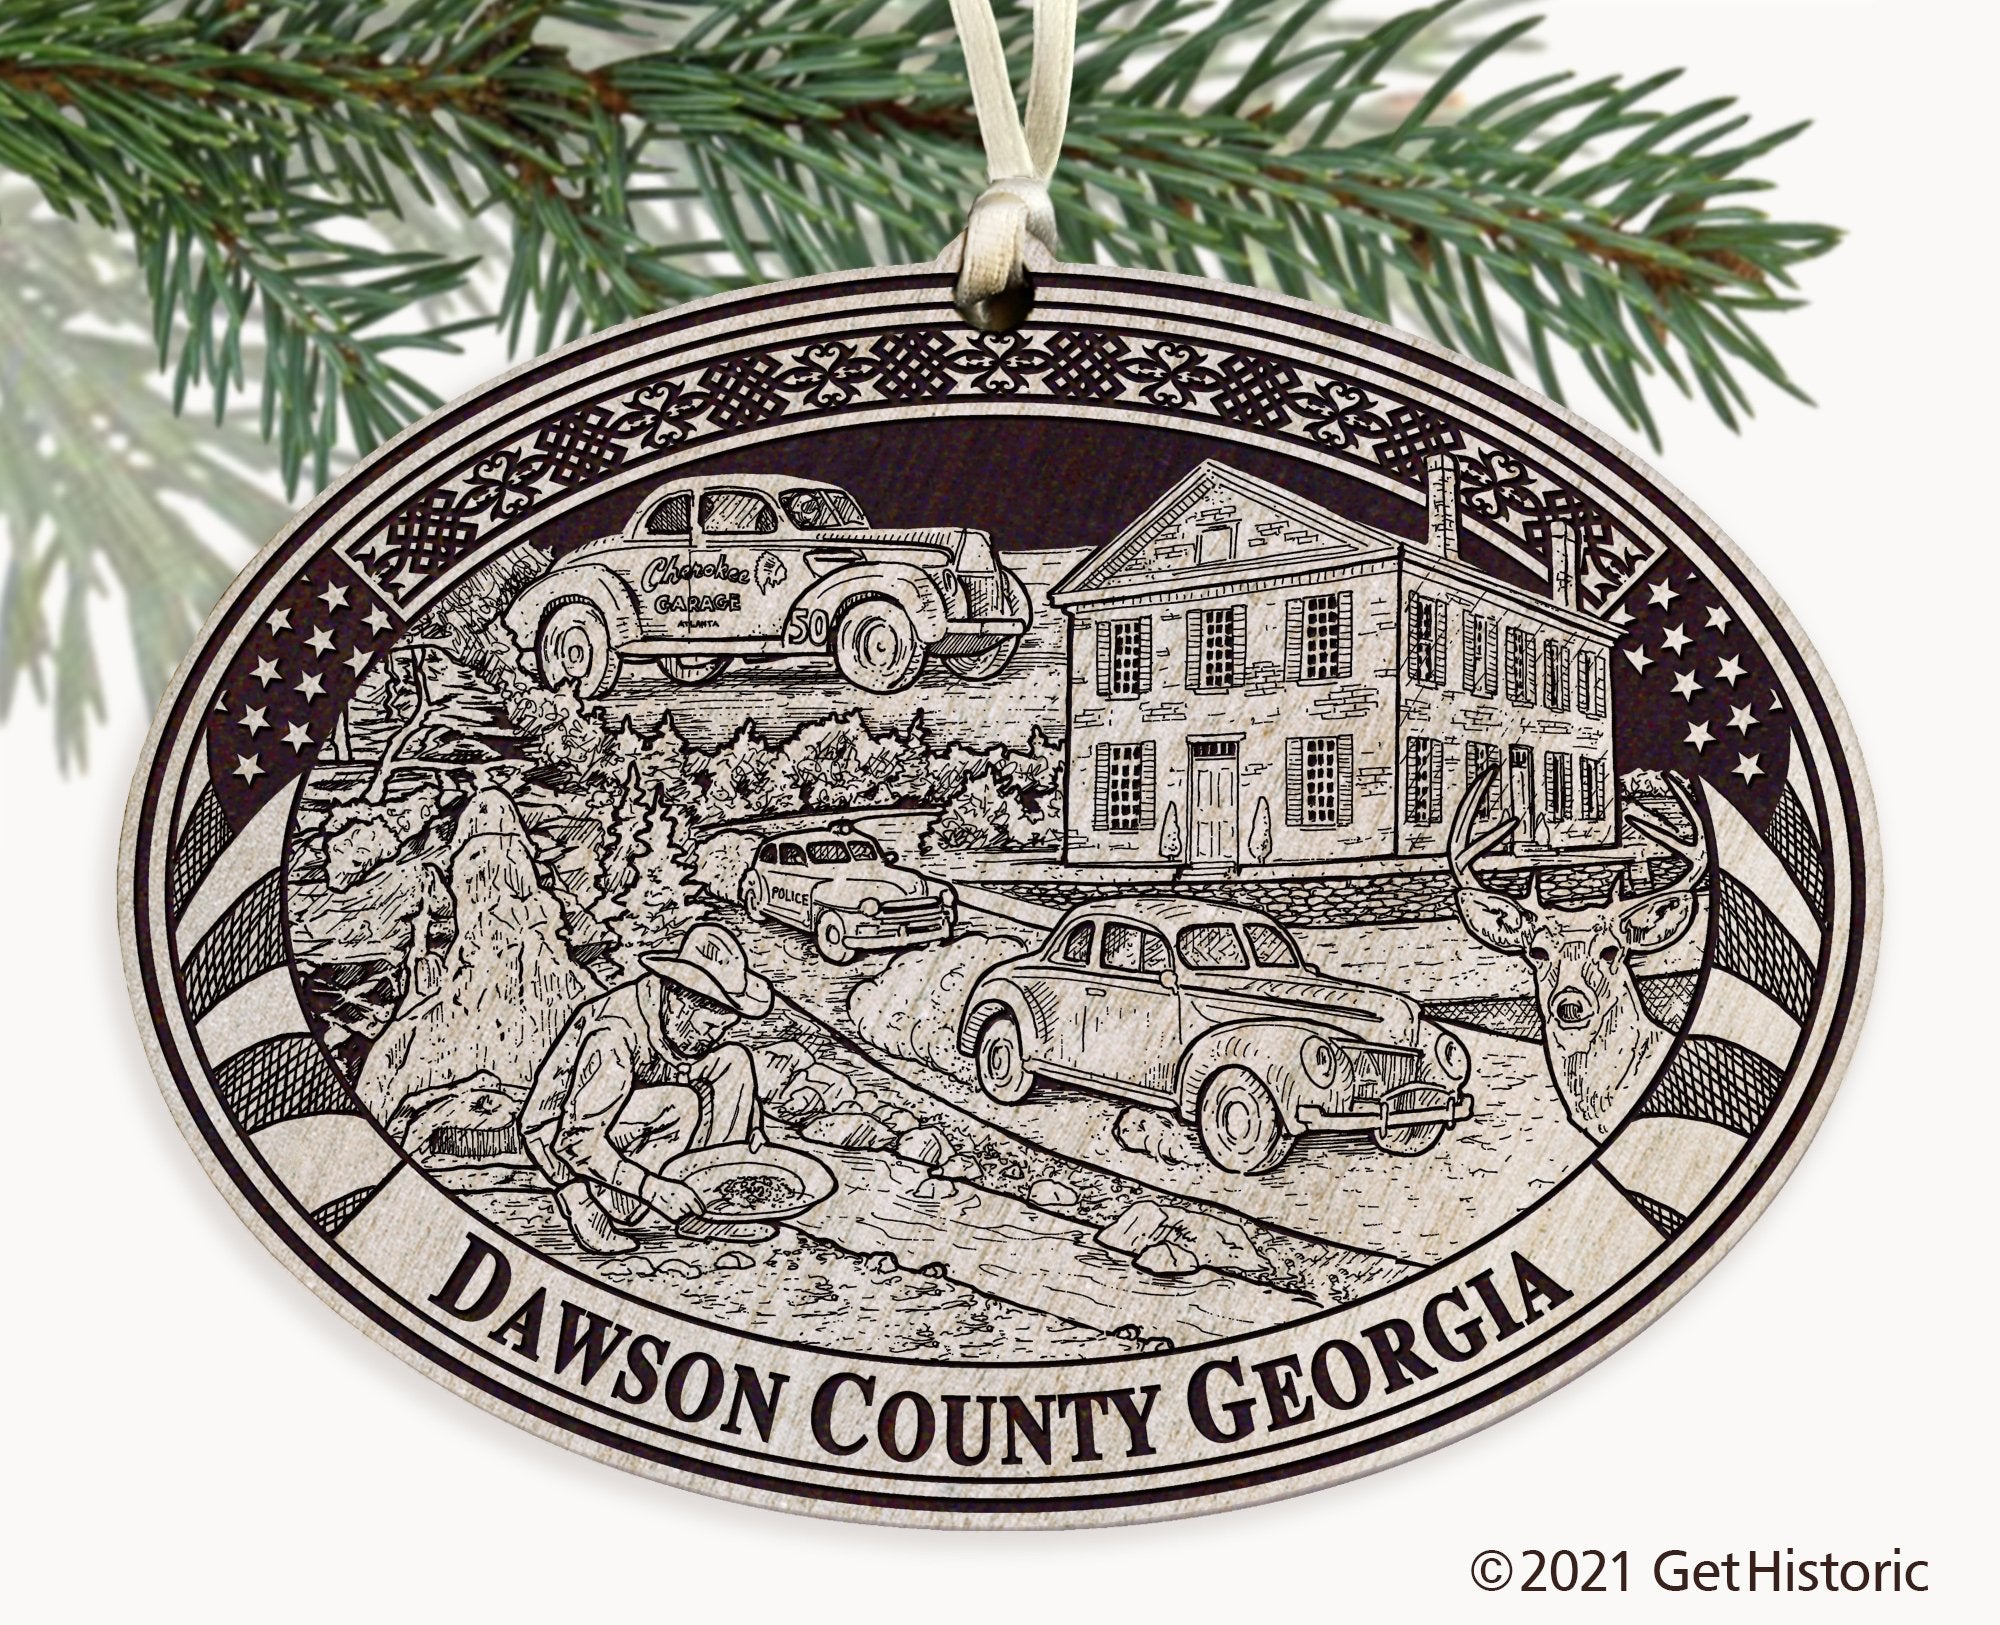 Dawson County Georgia Engraved Ornament